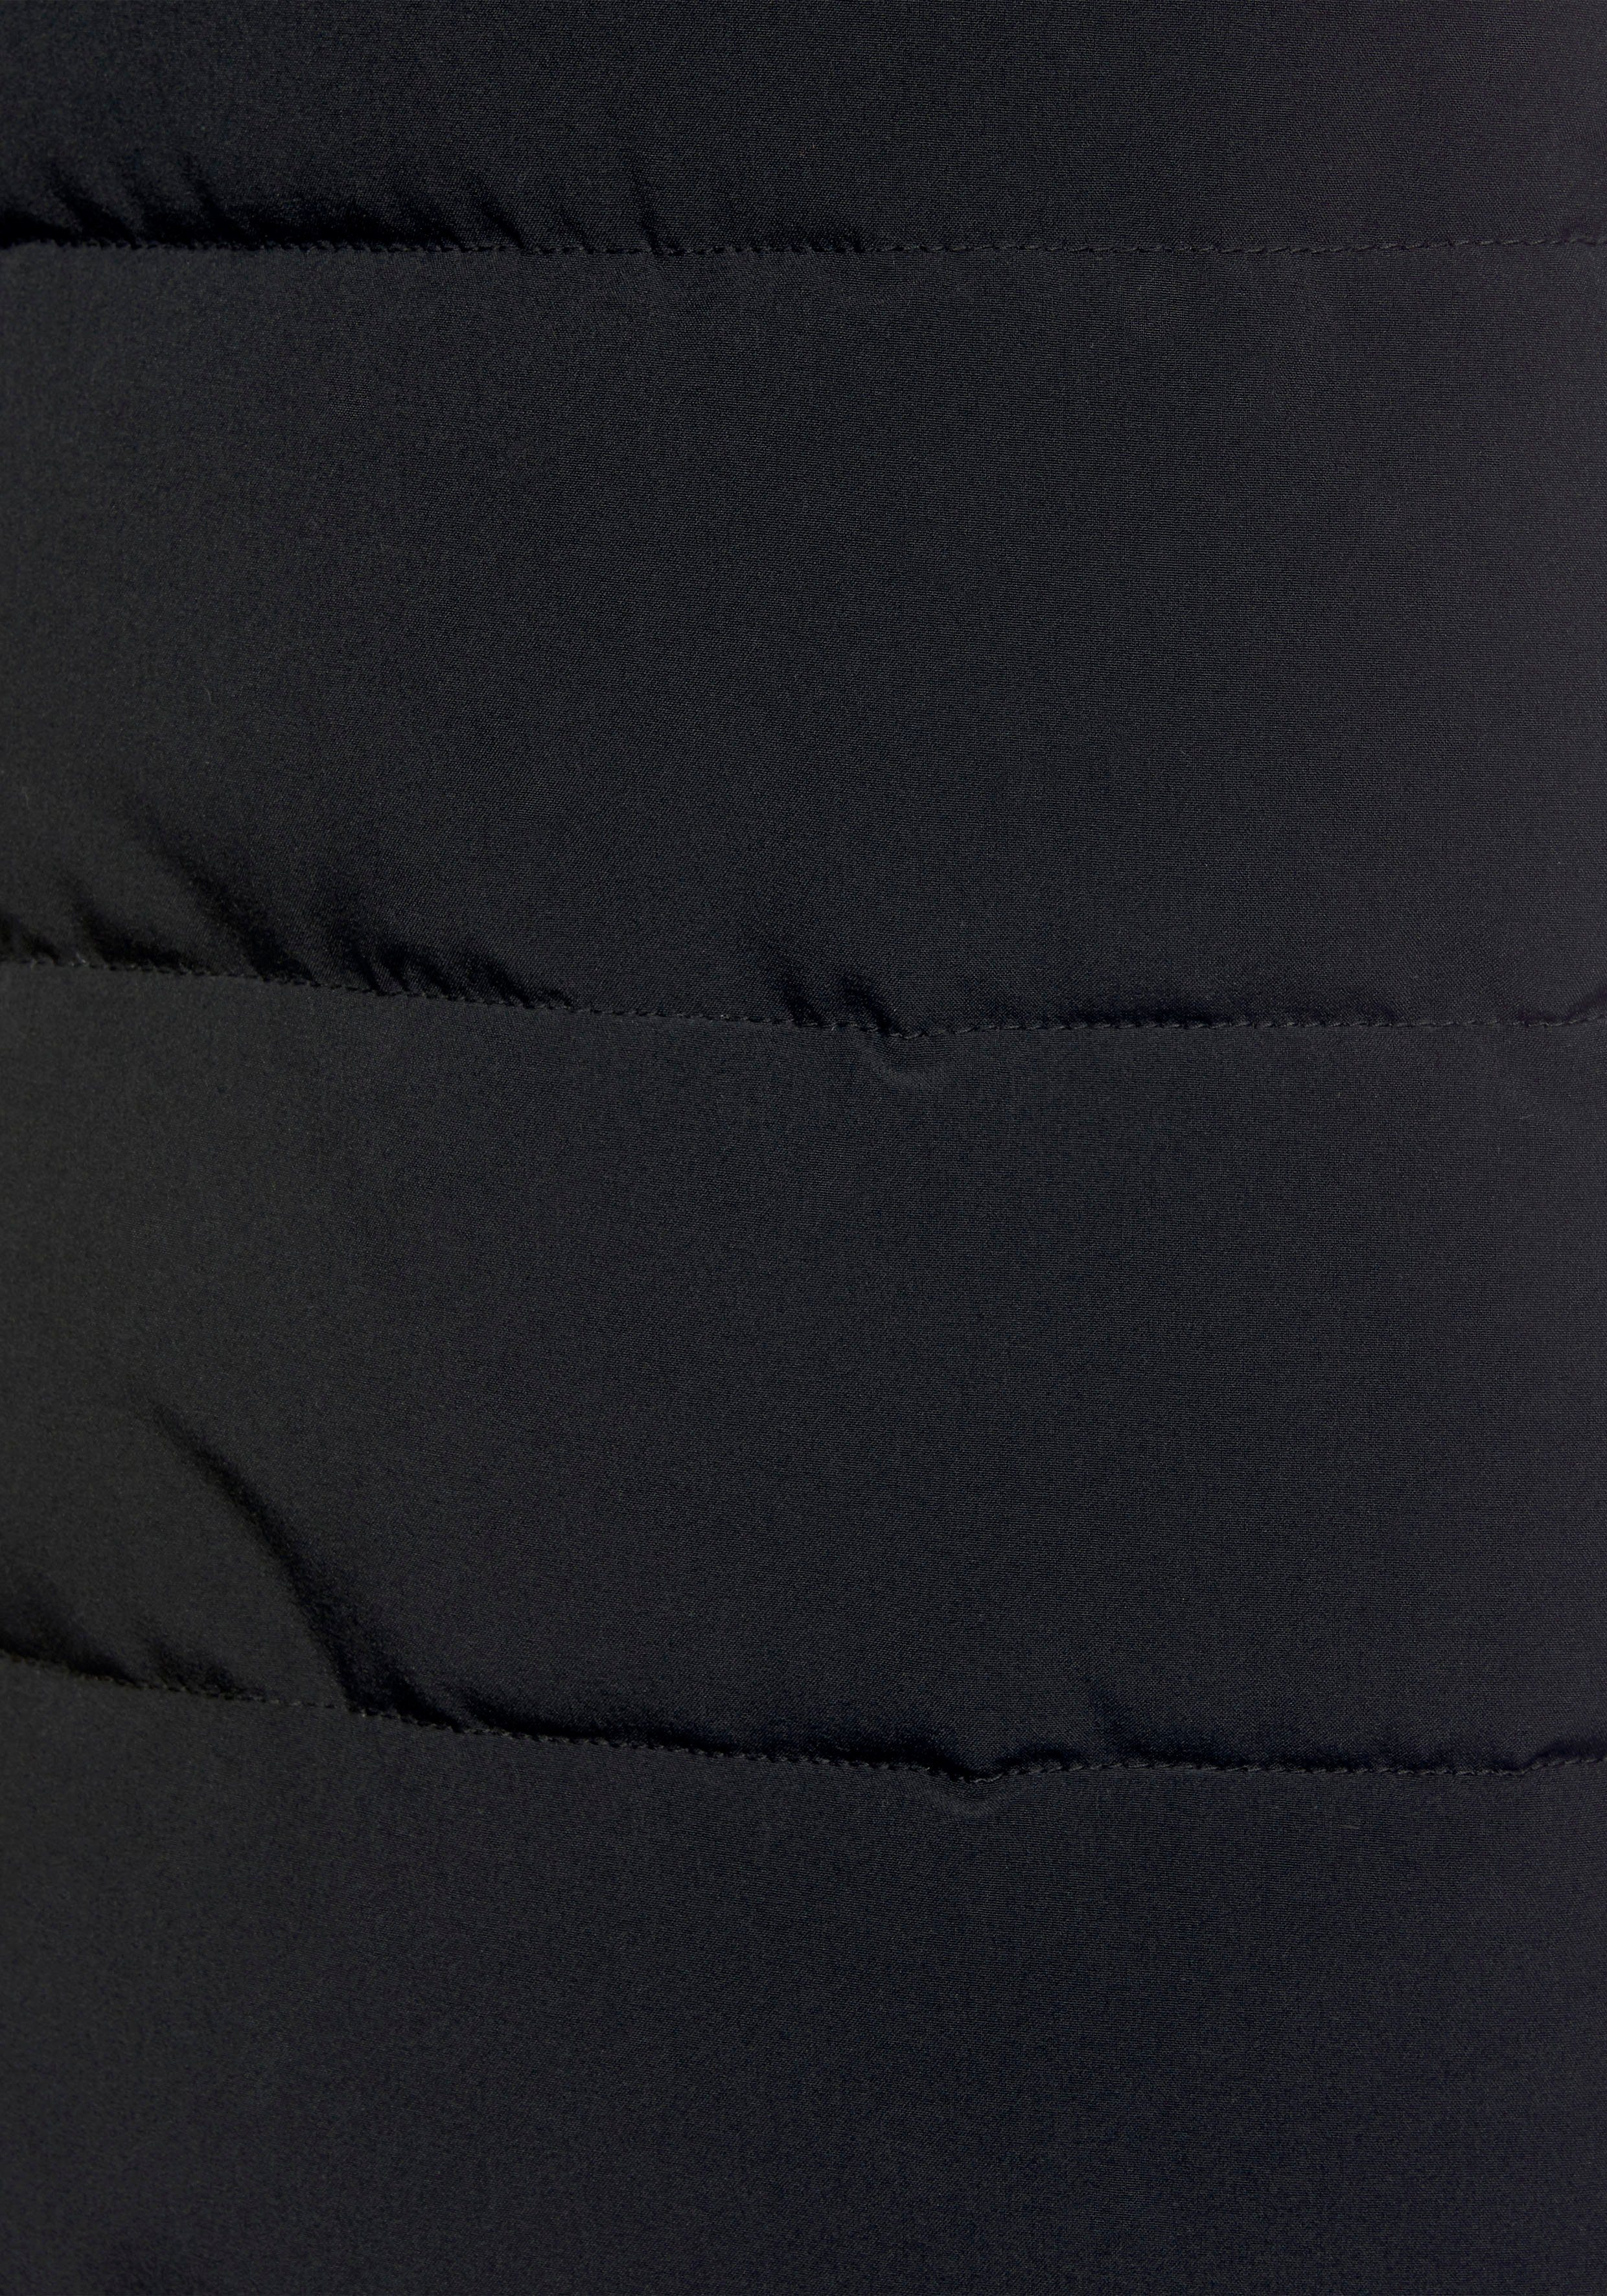 ALPENBLITZ Steppmantel mit auf abnehmbarer Material) Gürtel Kuschel-Kapuze nachhaltigem long (Jacke aus Mantel dem Markenprägung Oslo & black